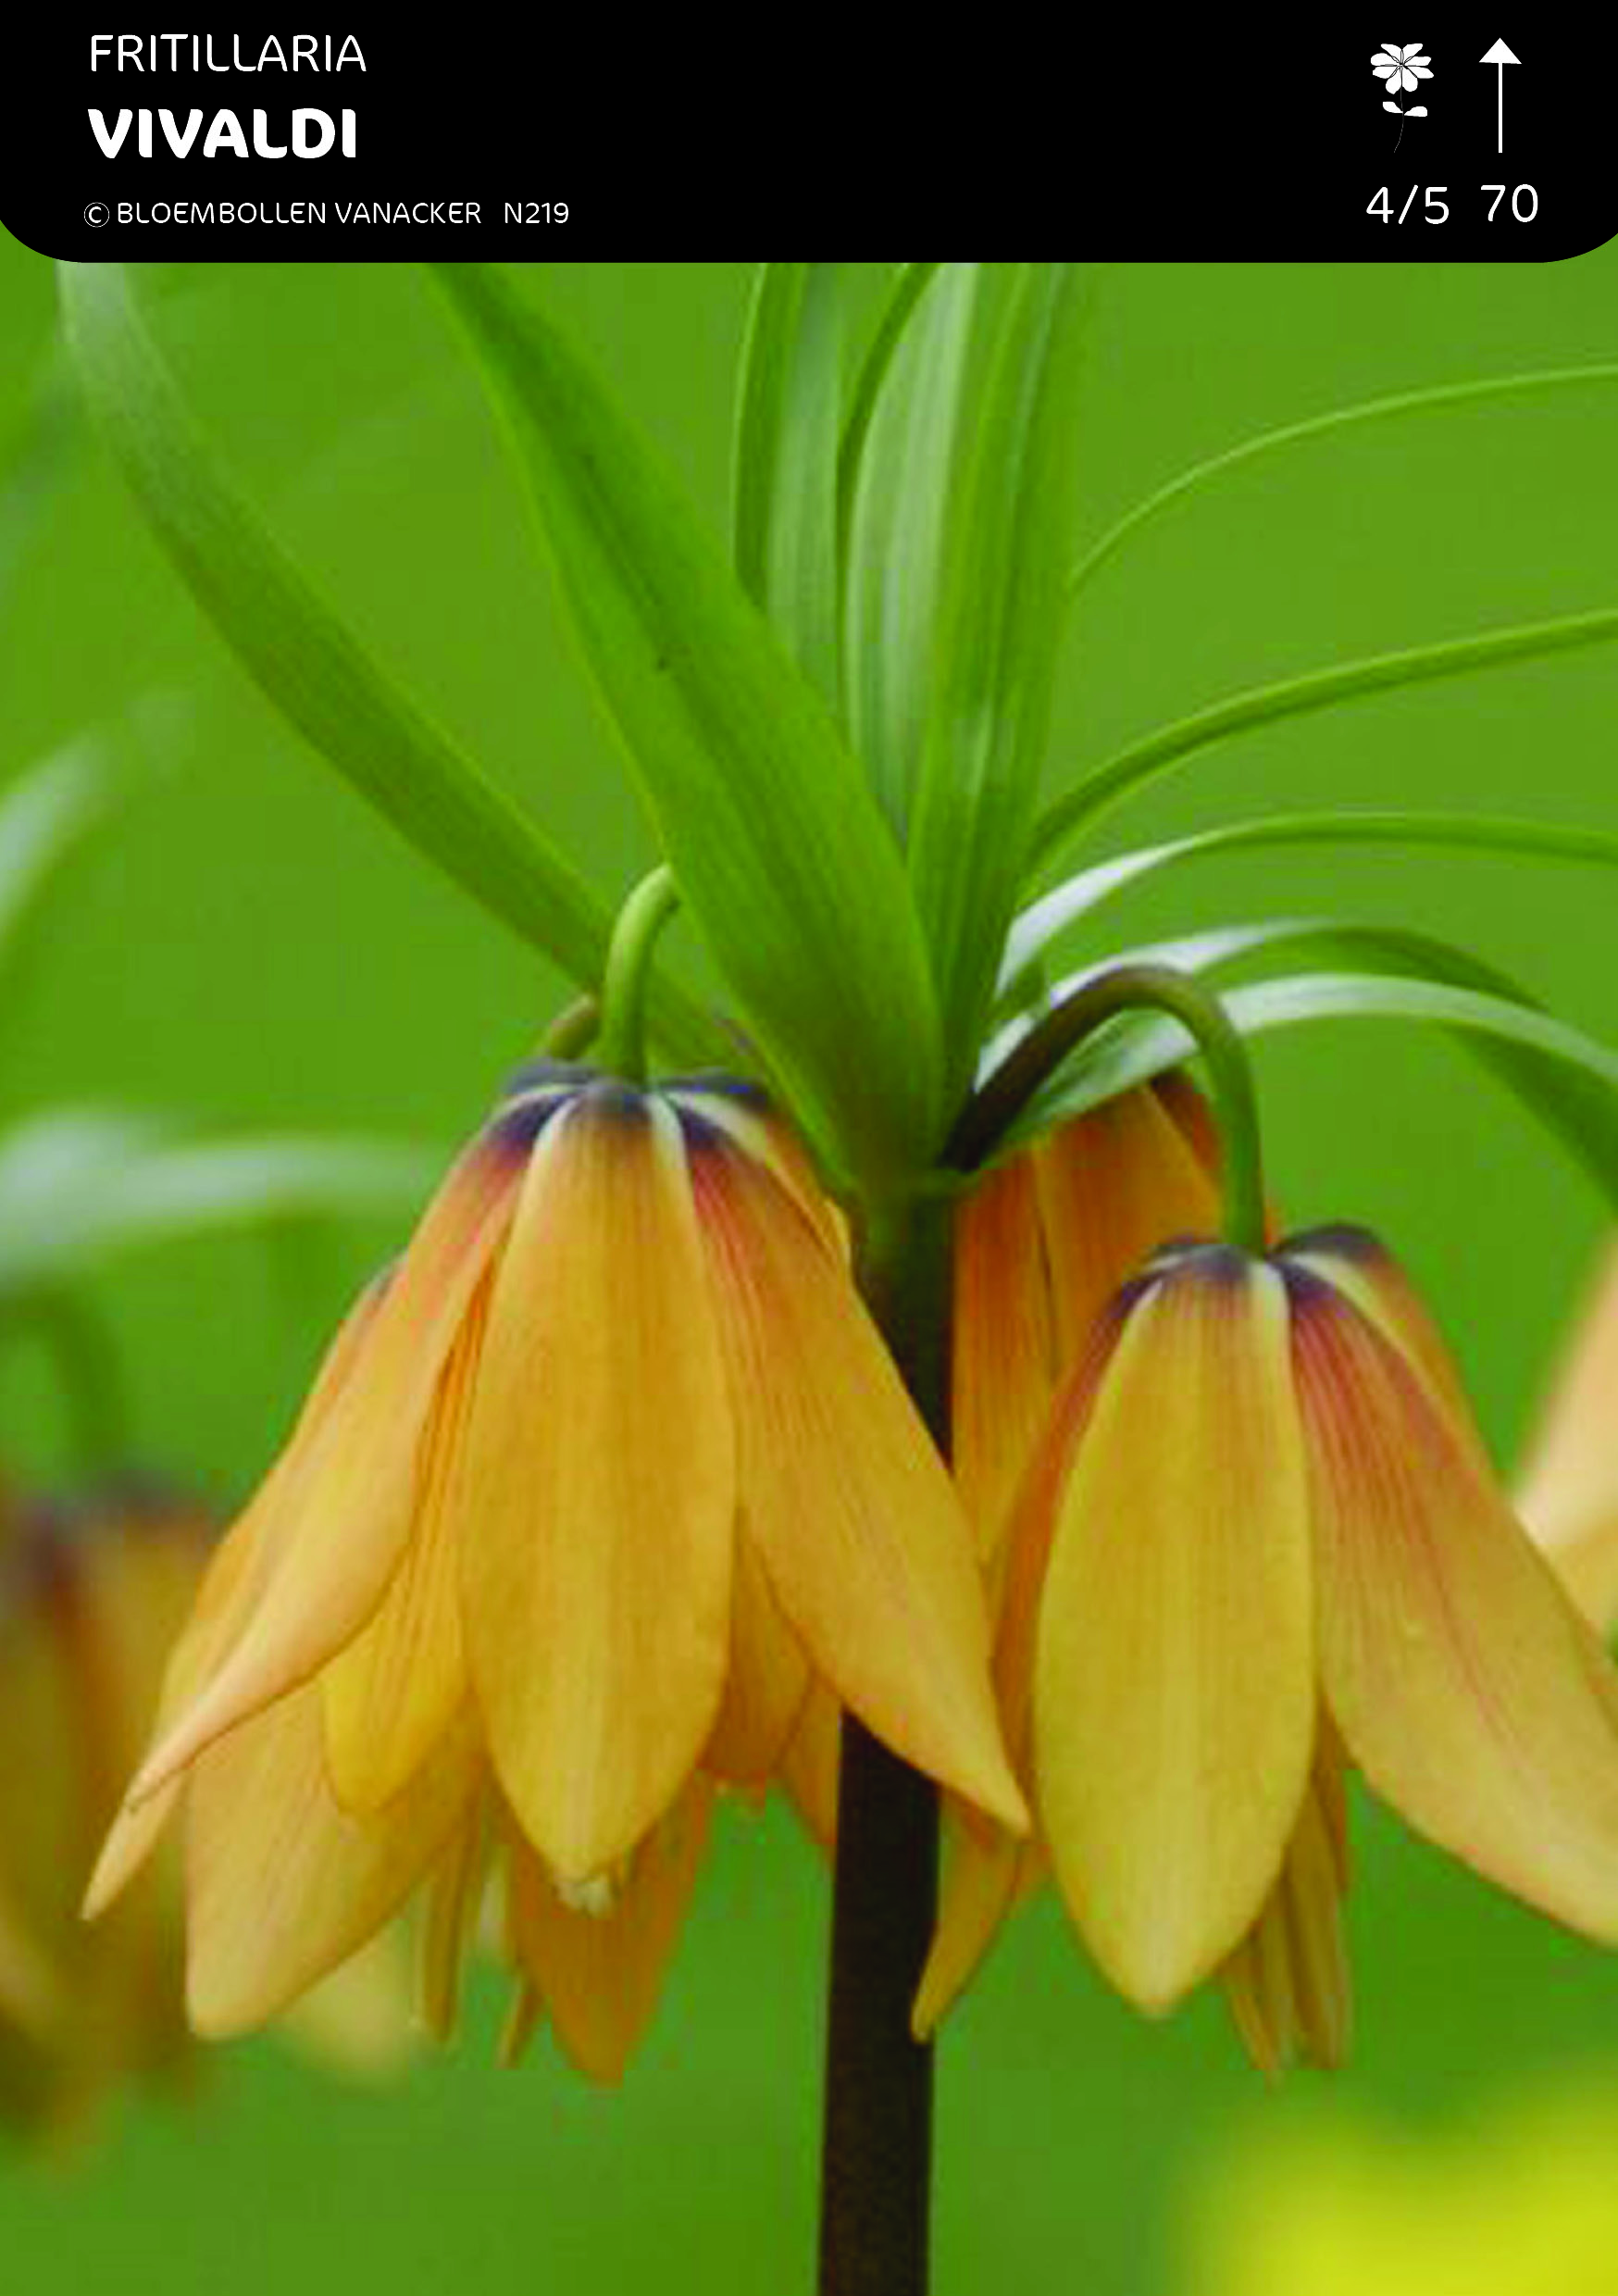 Fritillaria Vivaldi